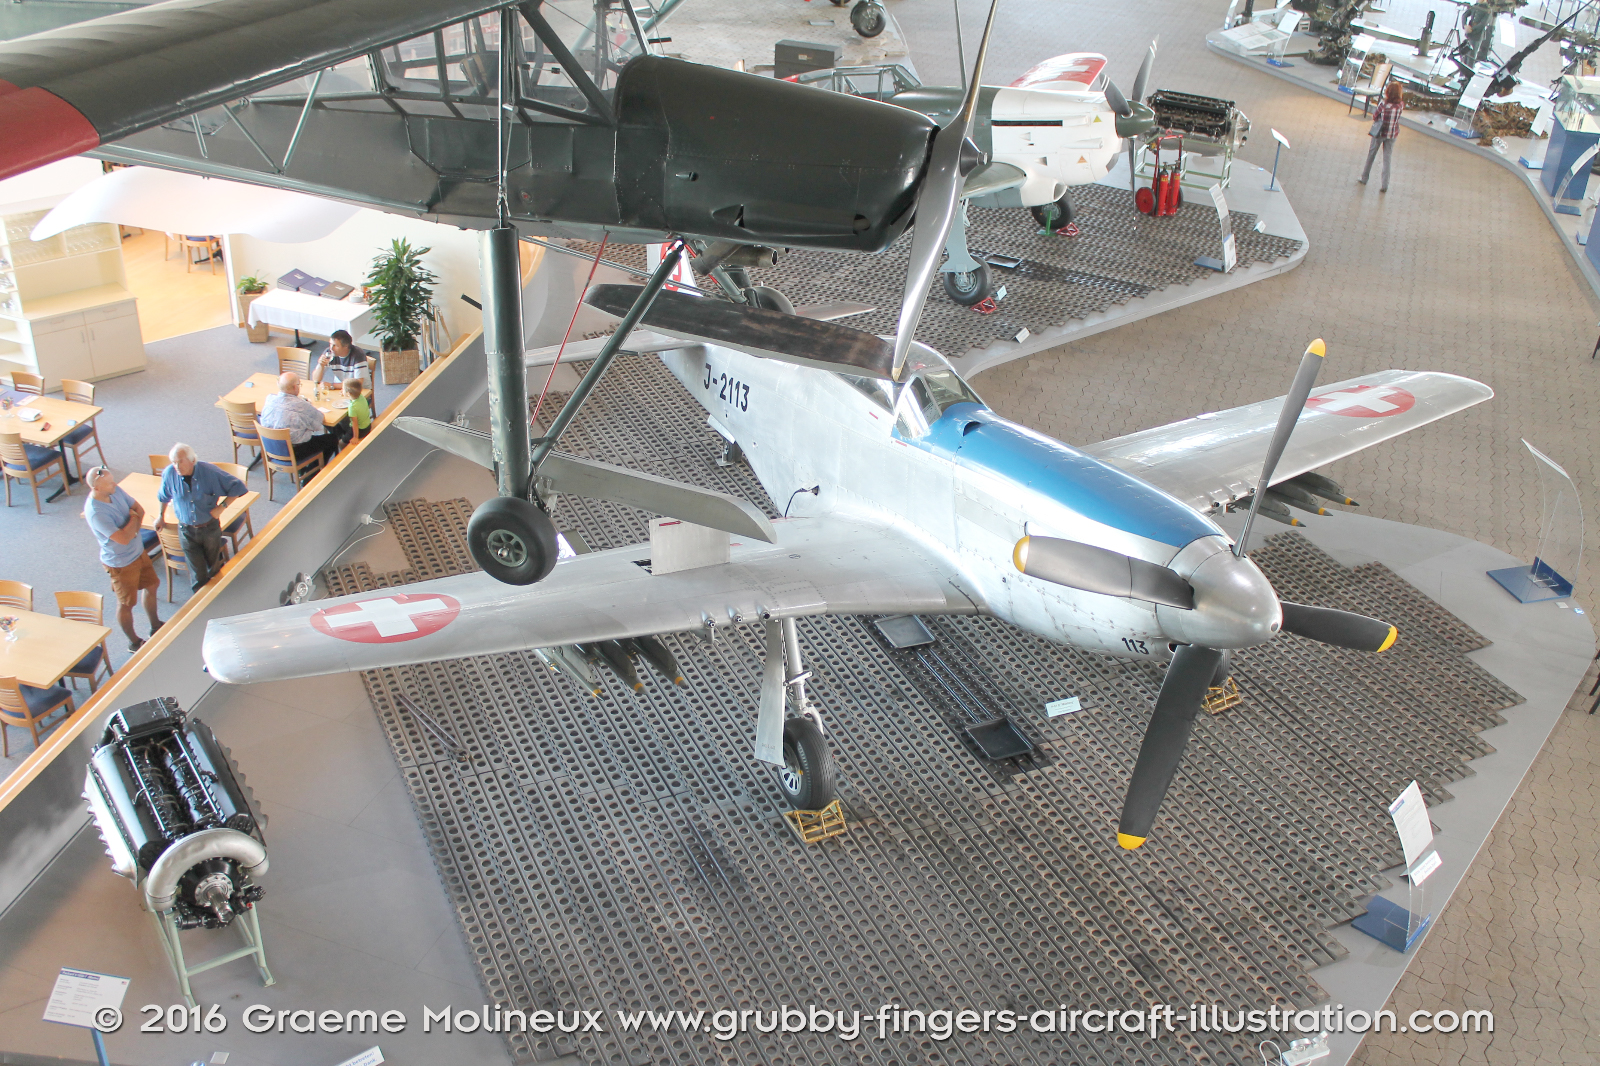 FIESELER_Storch_A-100_Swiss_Air_Force_Museum_2015_05_GrubbyFingers